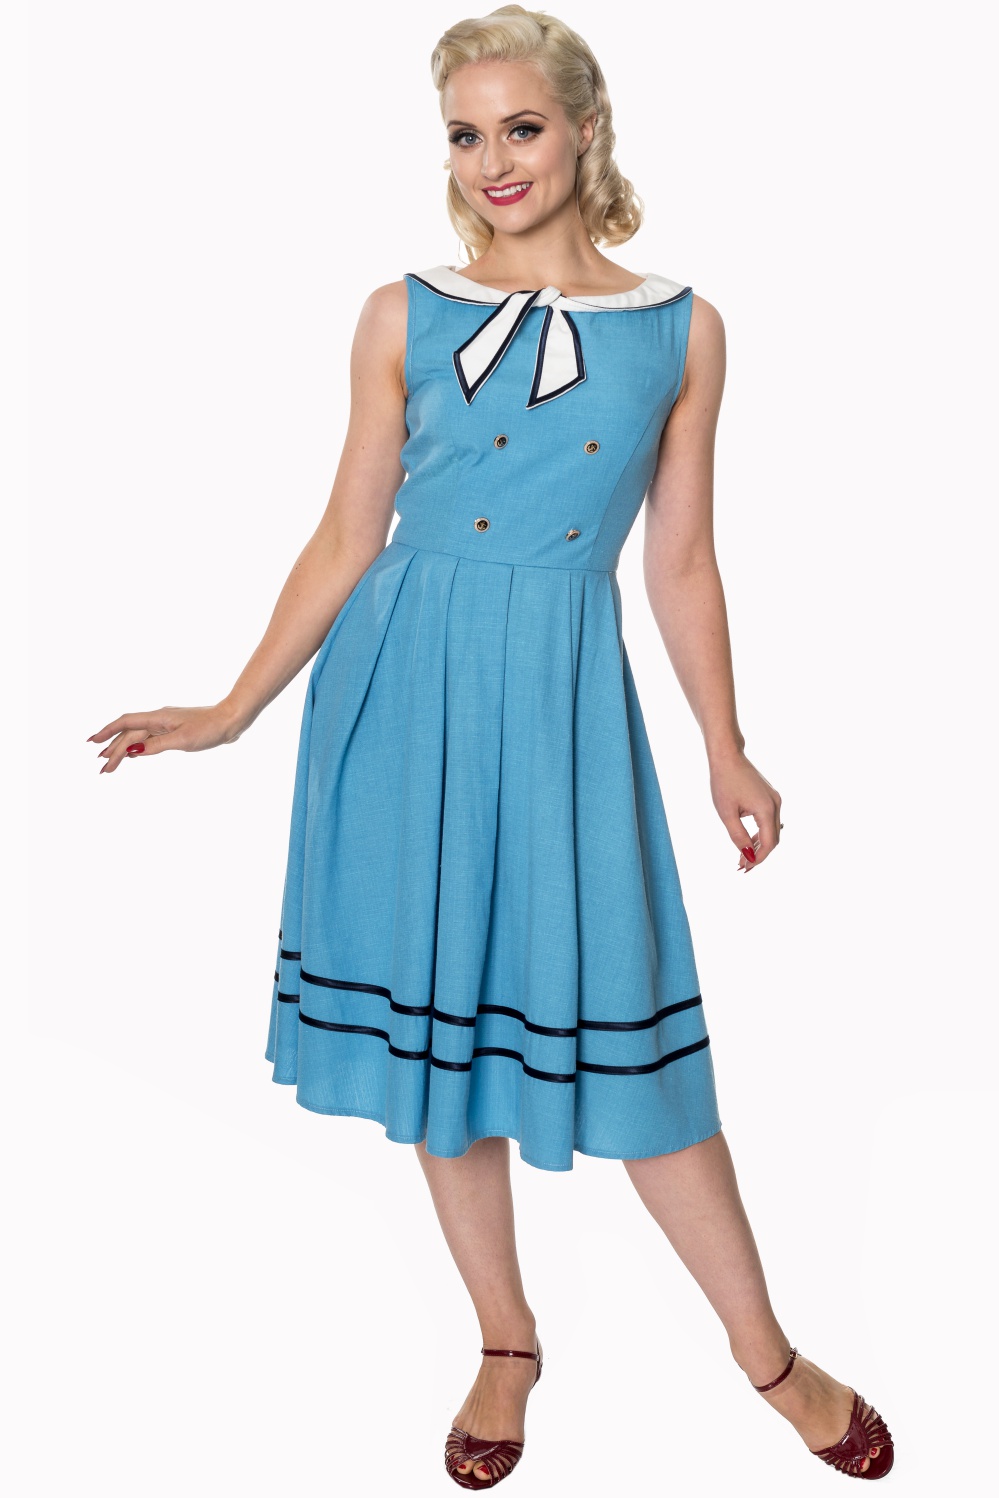 Dancing Days Aquarius 50s Sailor Sky Blue Dress | Free UK P&P